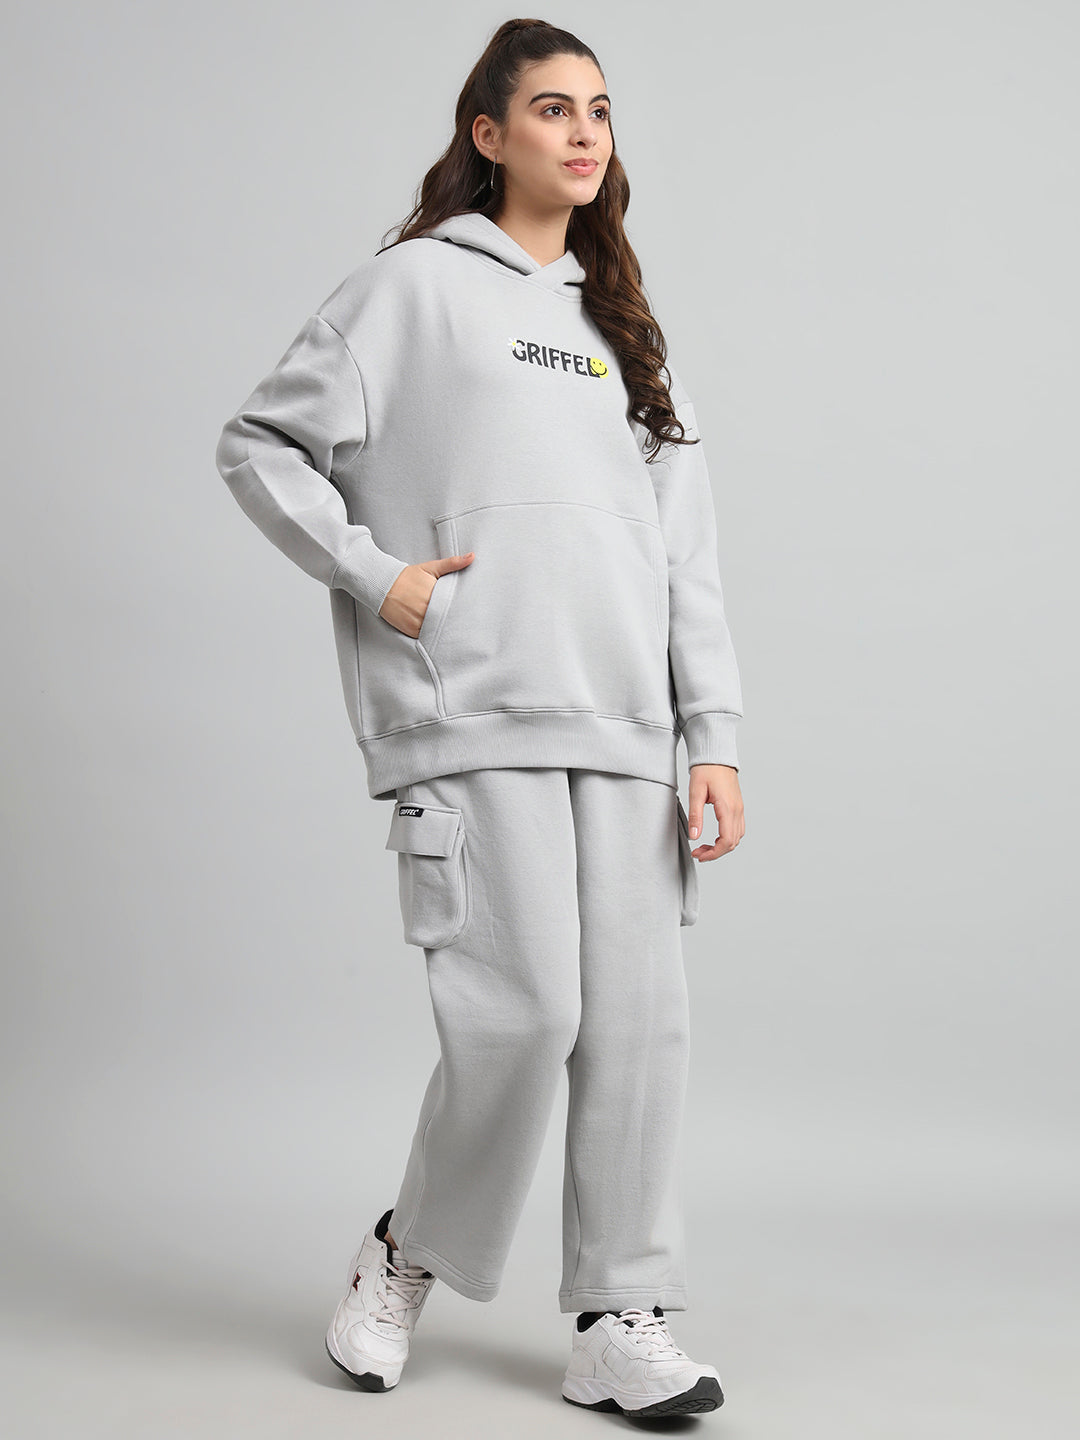 Griffel Women's Steel Grey Chill Vibe Print Front Logo Oversized Fleece Hoodie Sweatshirt - griffel